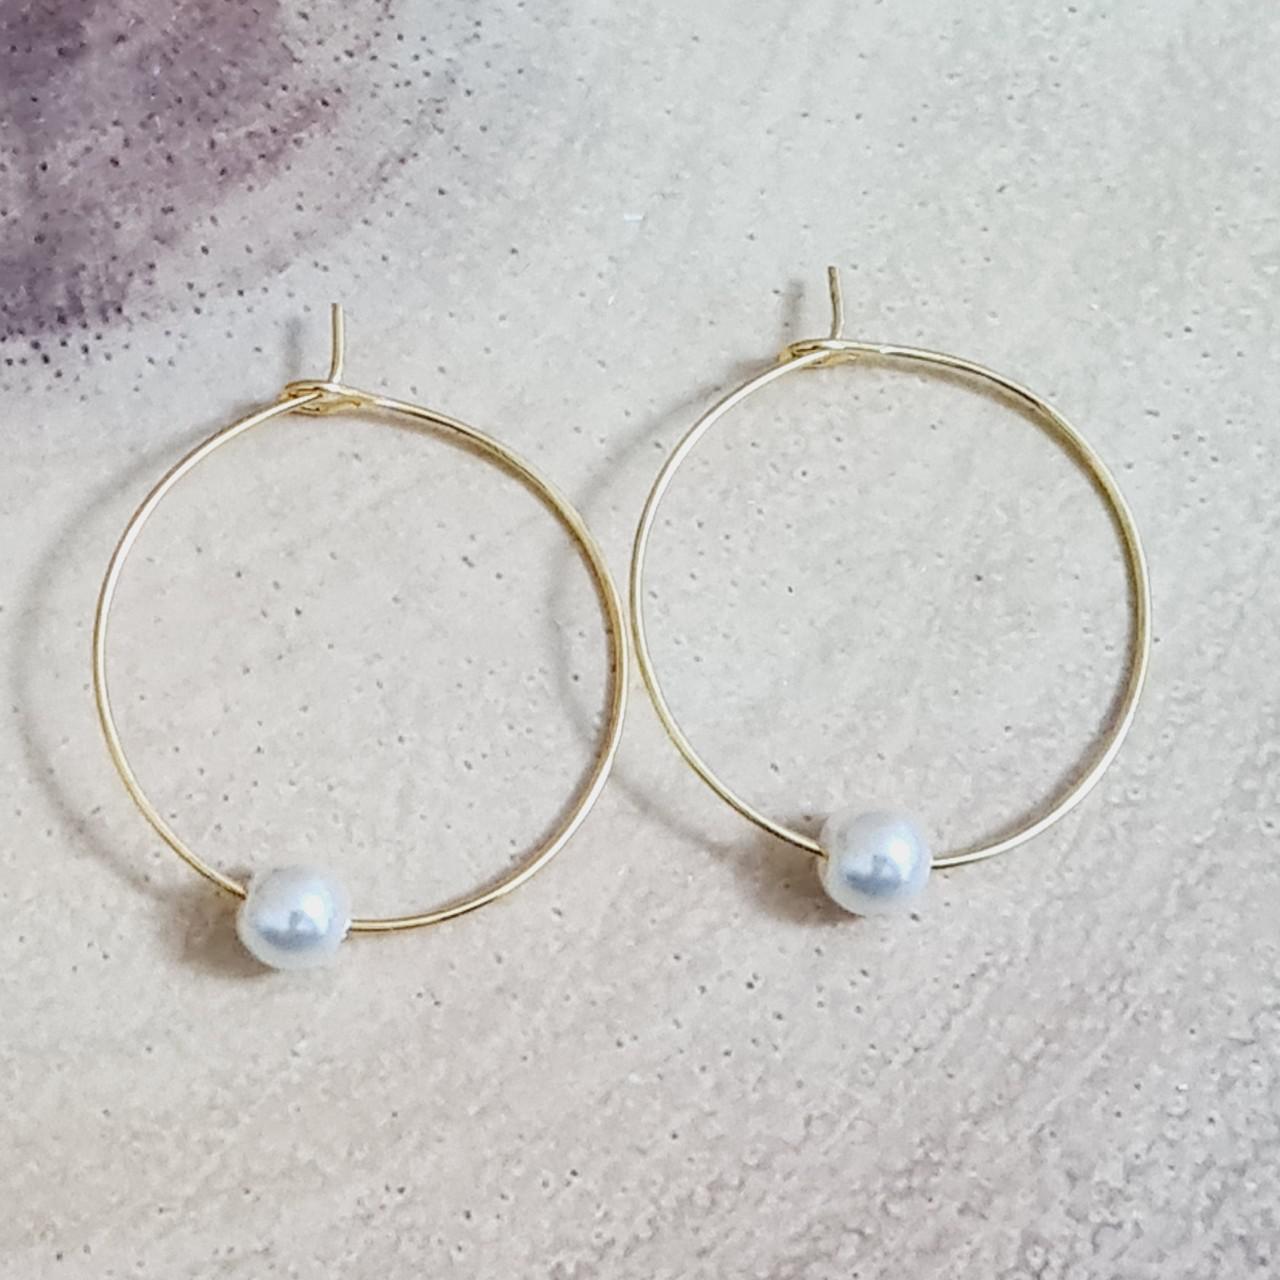 Product Image 1 - Boho Pearl hoops Earrings Gold